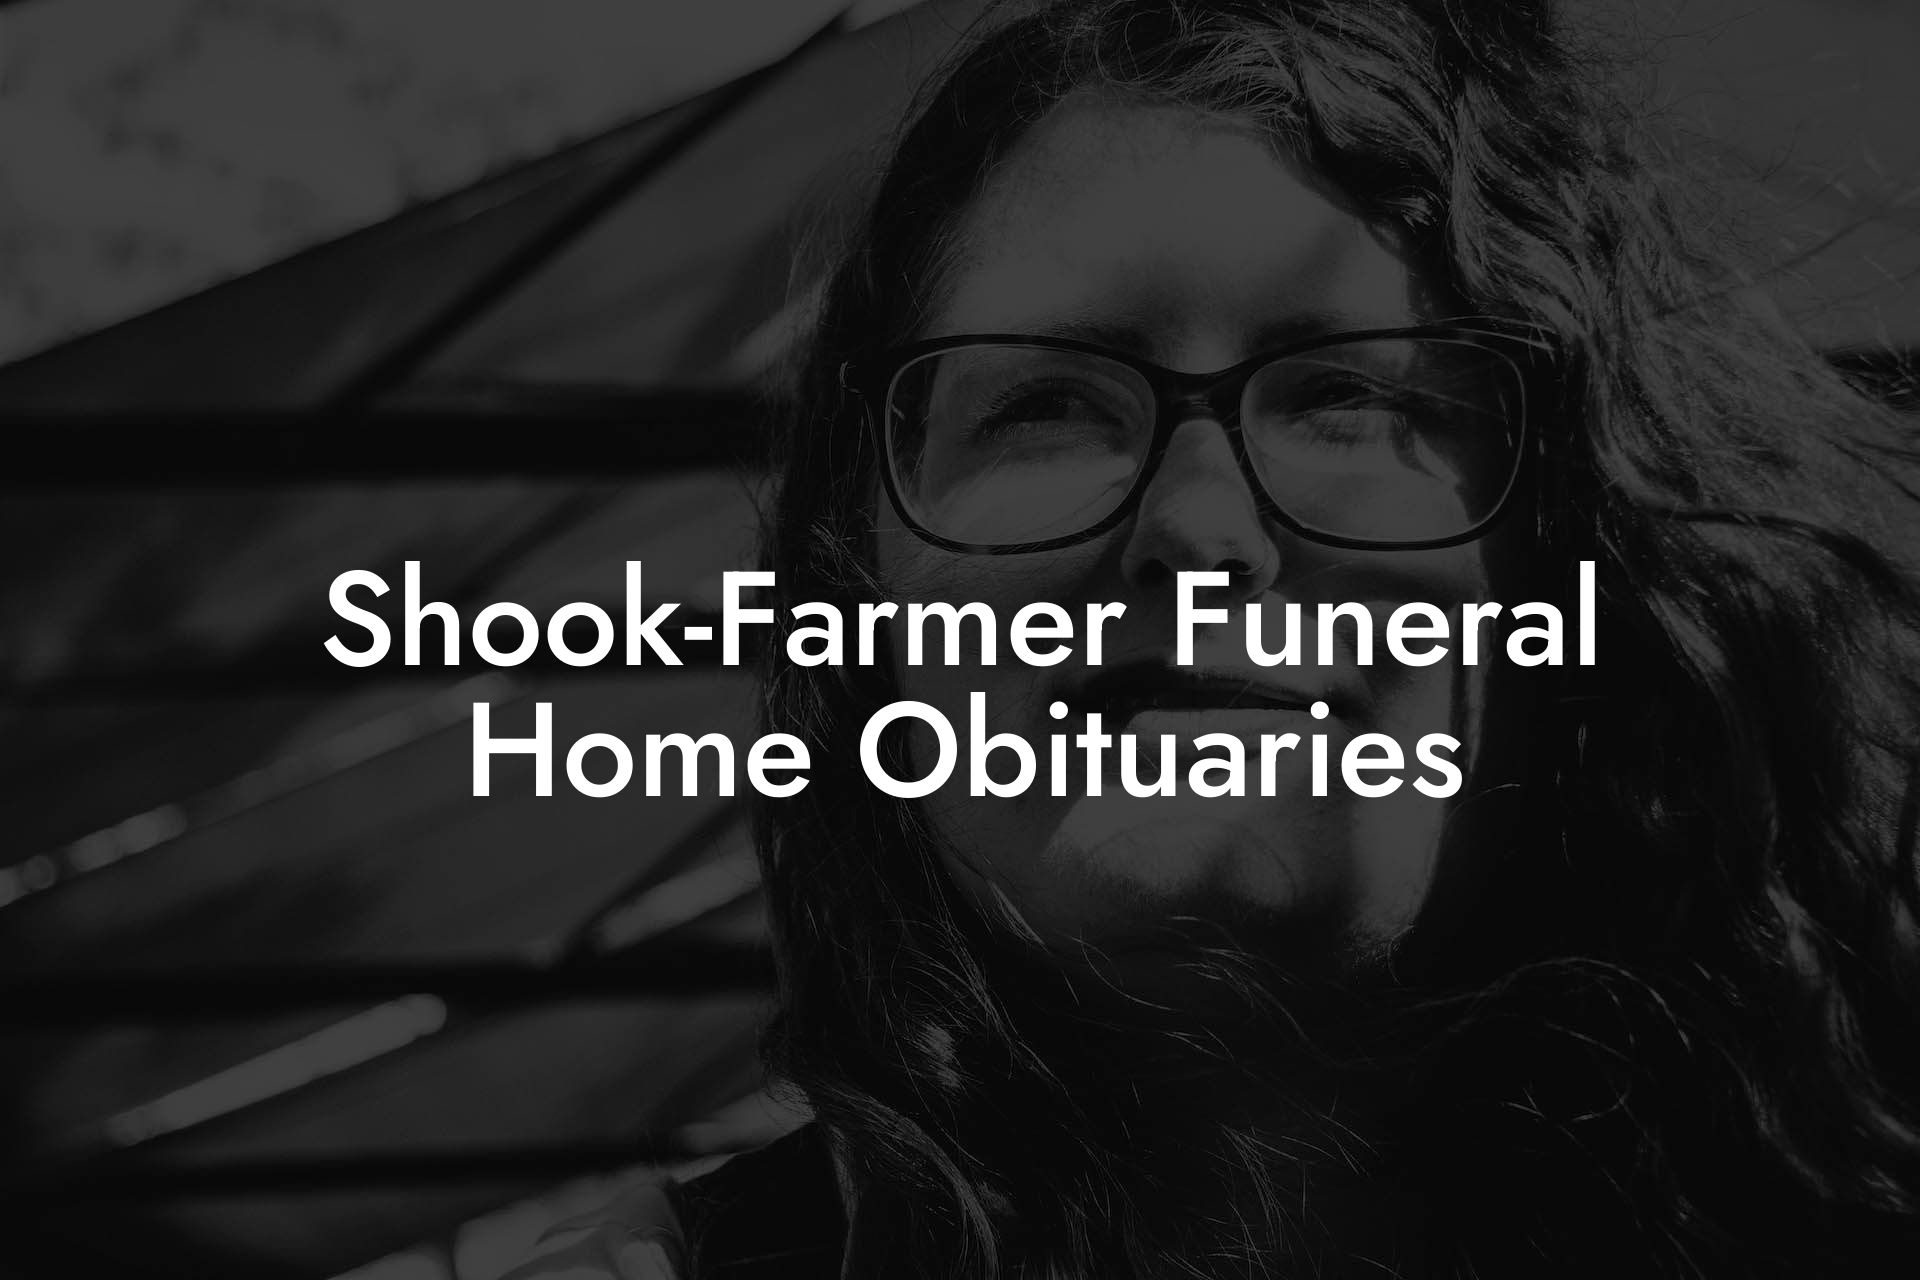 Shook-Farmer Funeral Home Obituaries